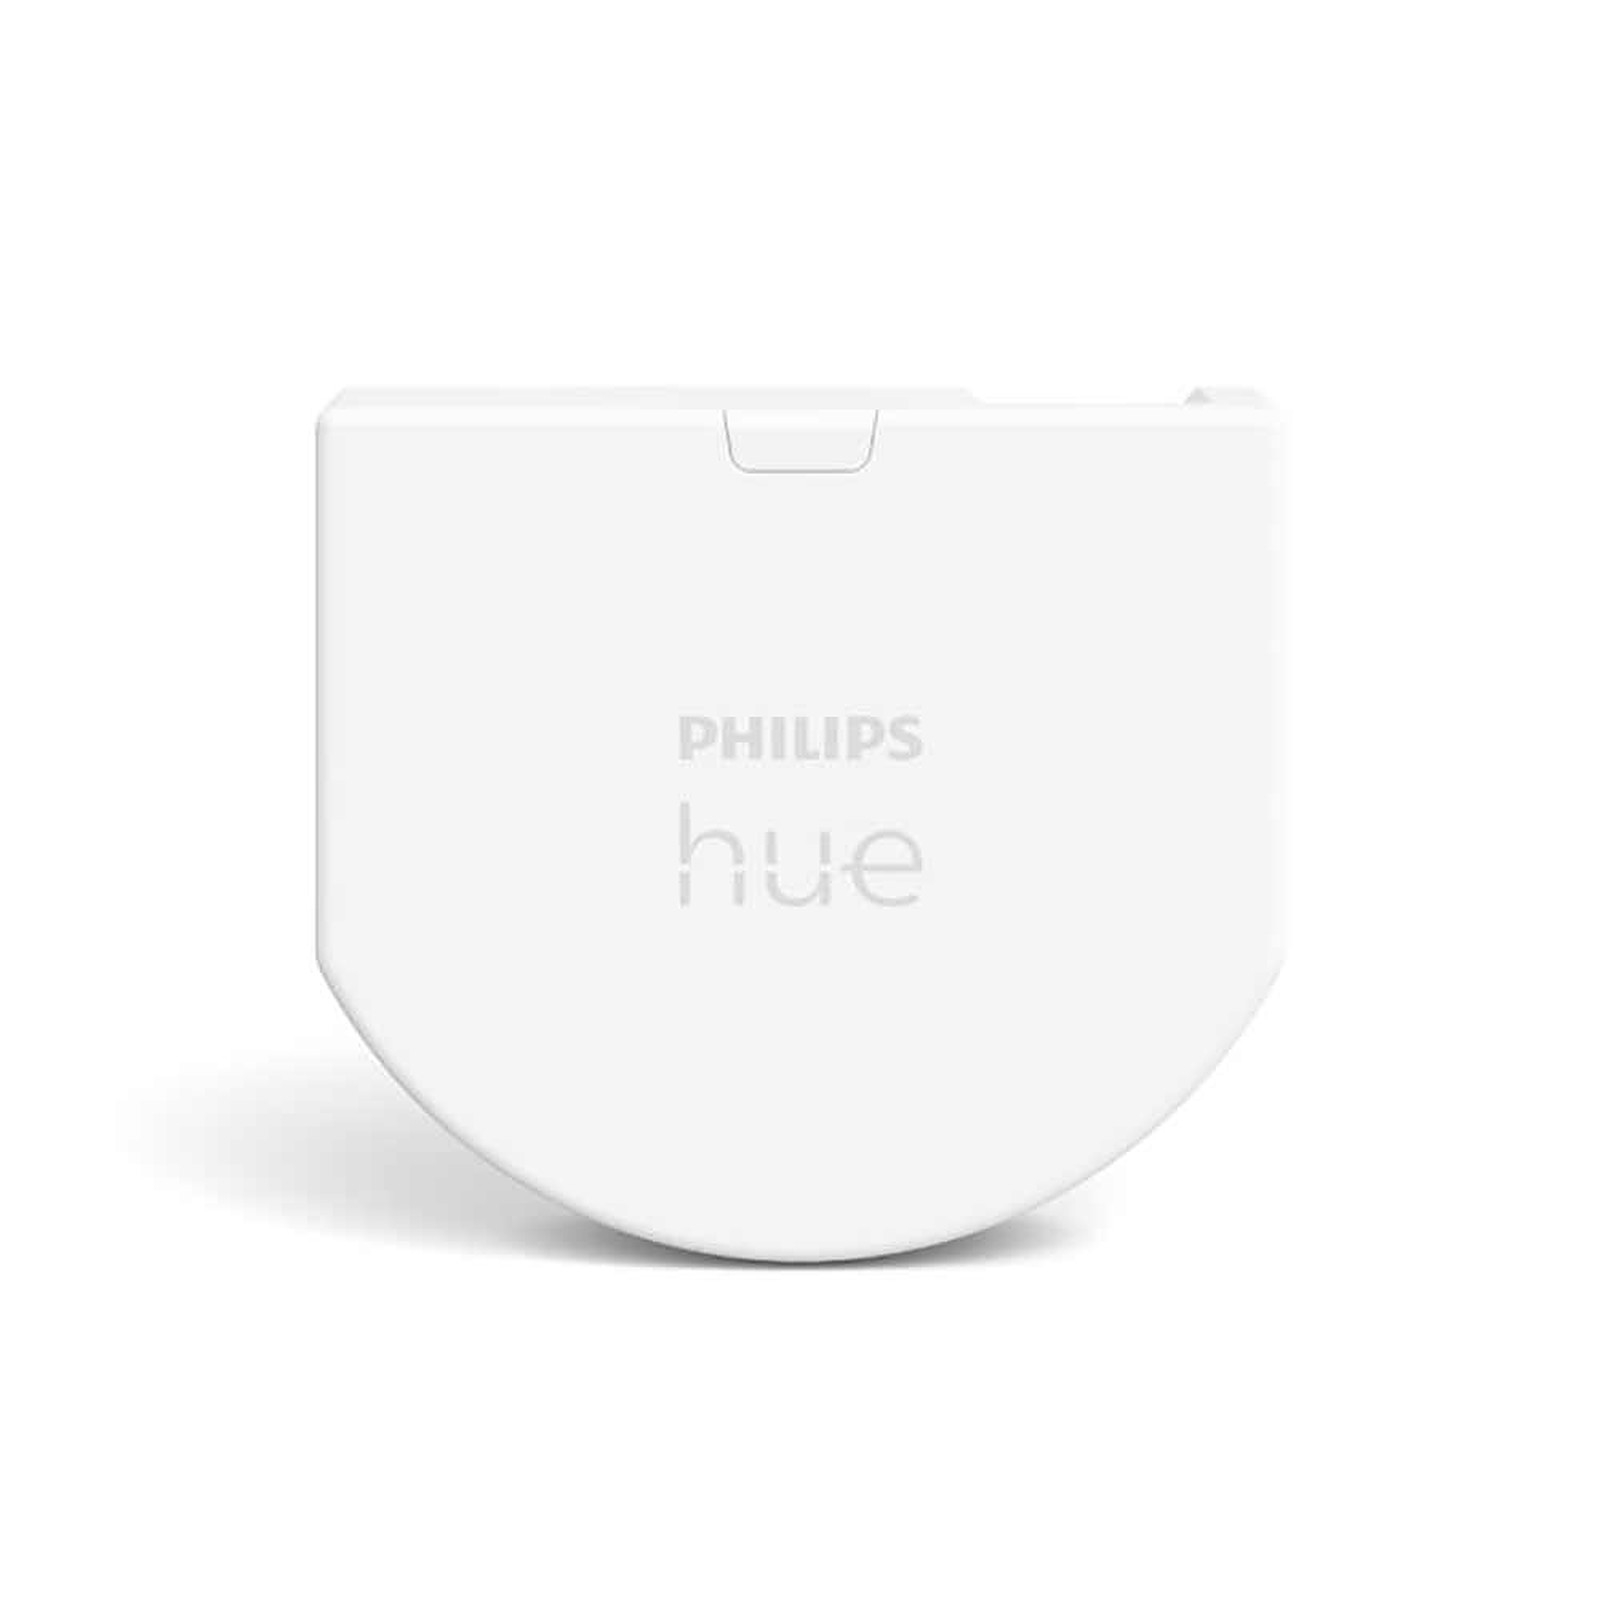 Philips Hue Wall Switch Module - Accessoire eclairage connecte Philips